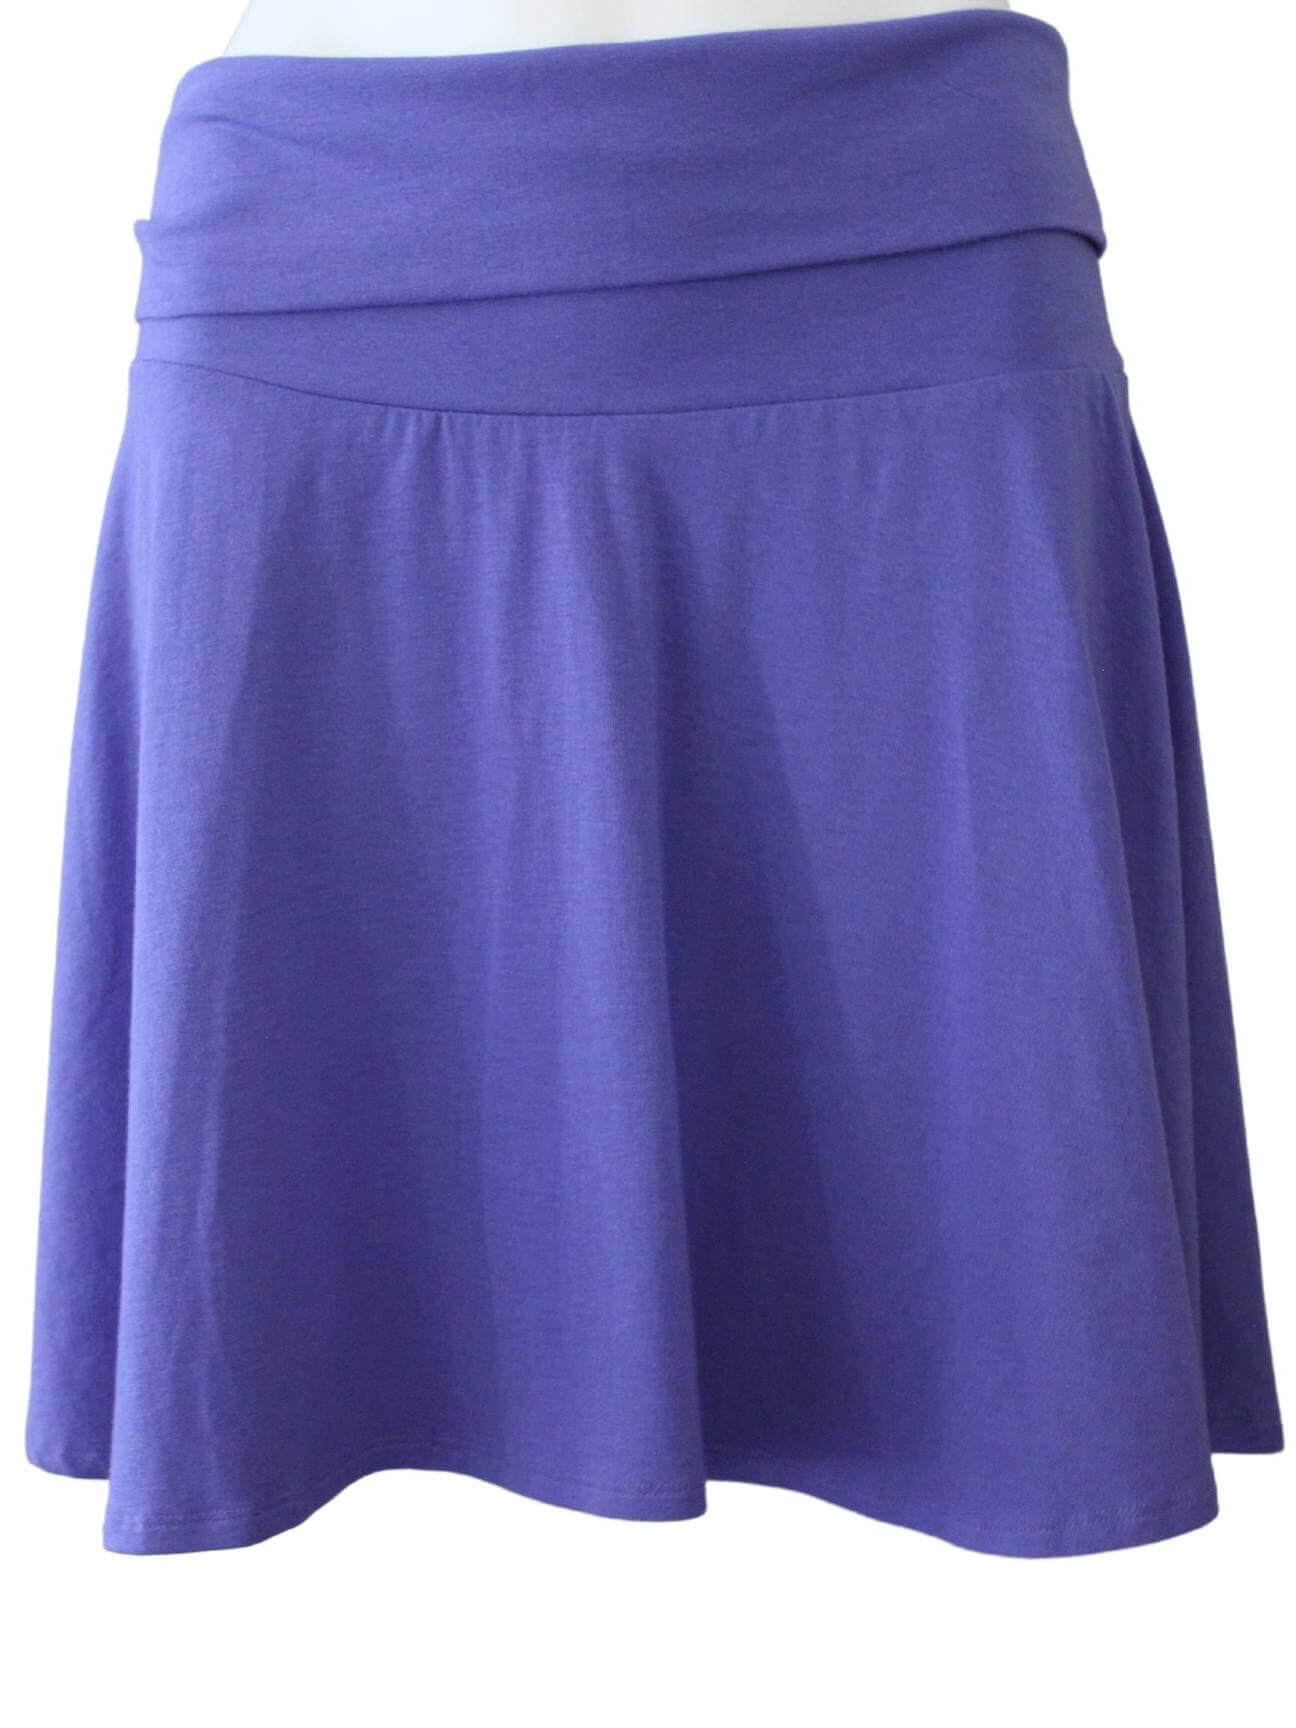 Light Summer MAURICES purple mini skirt